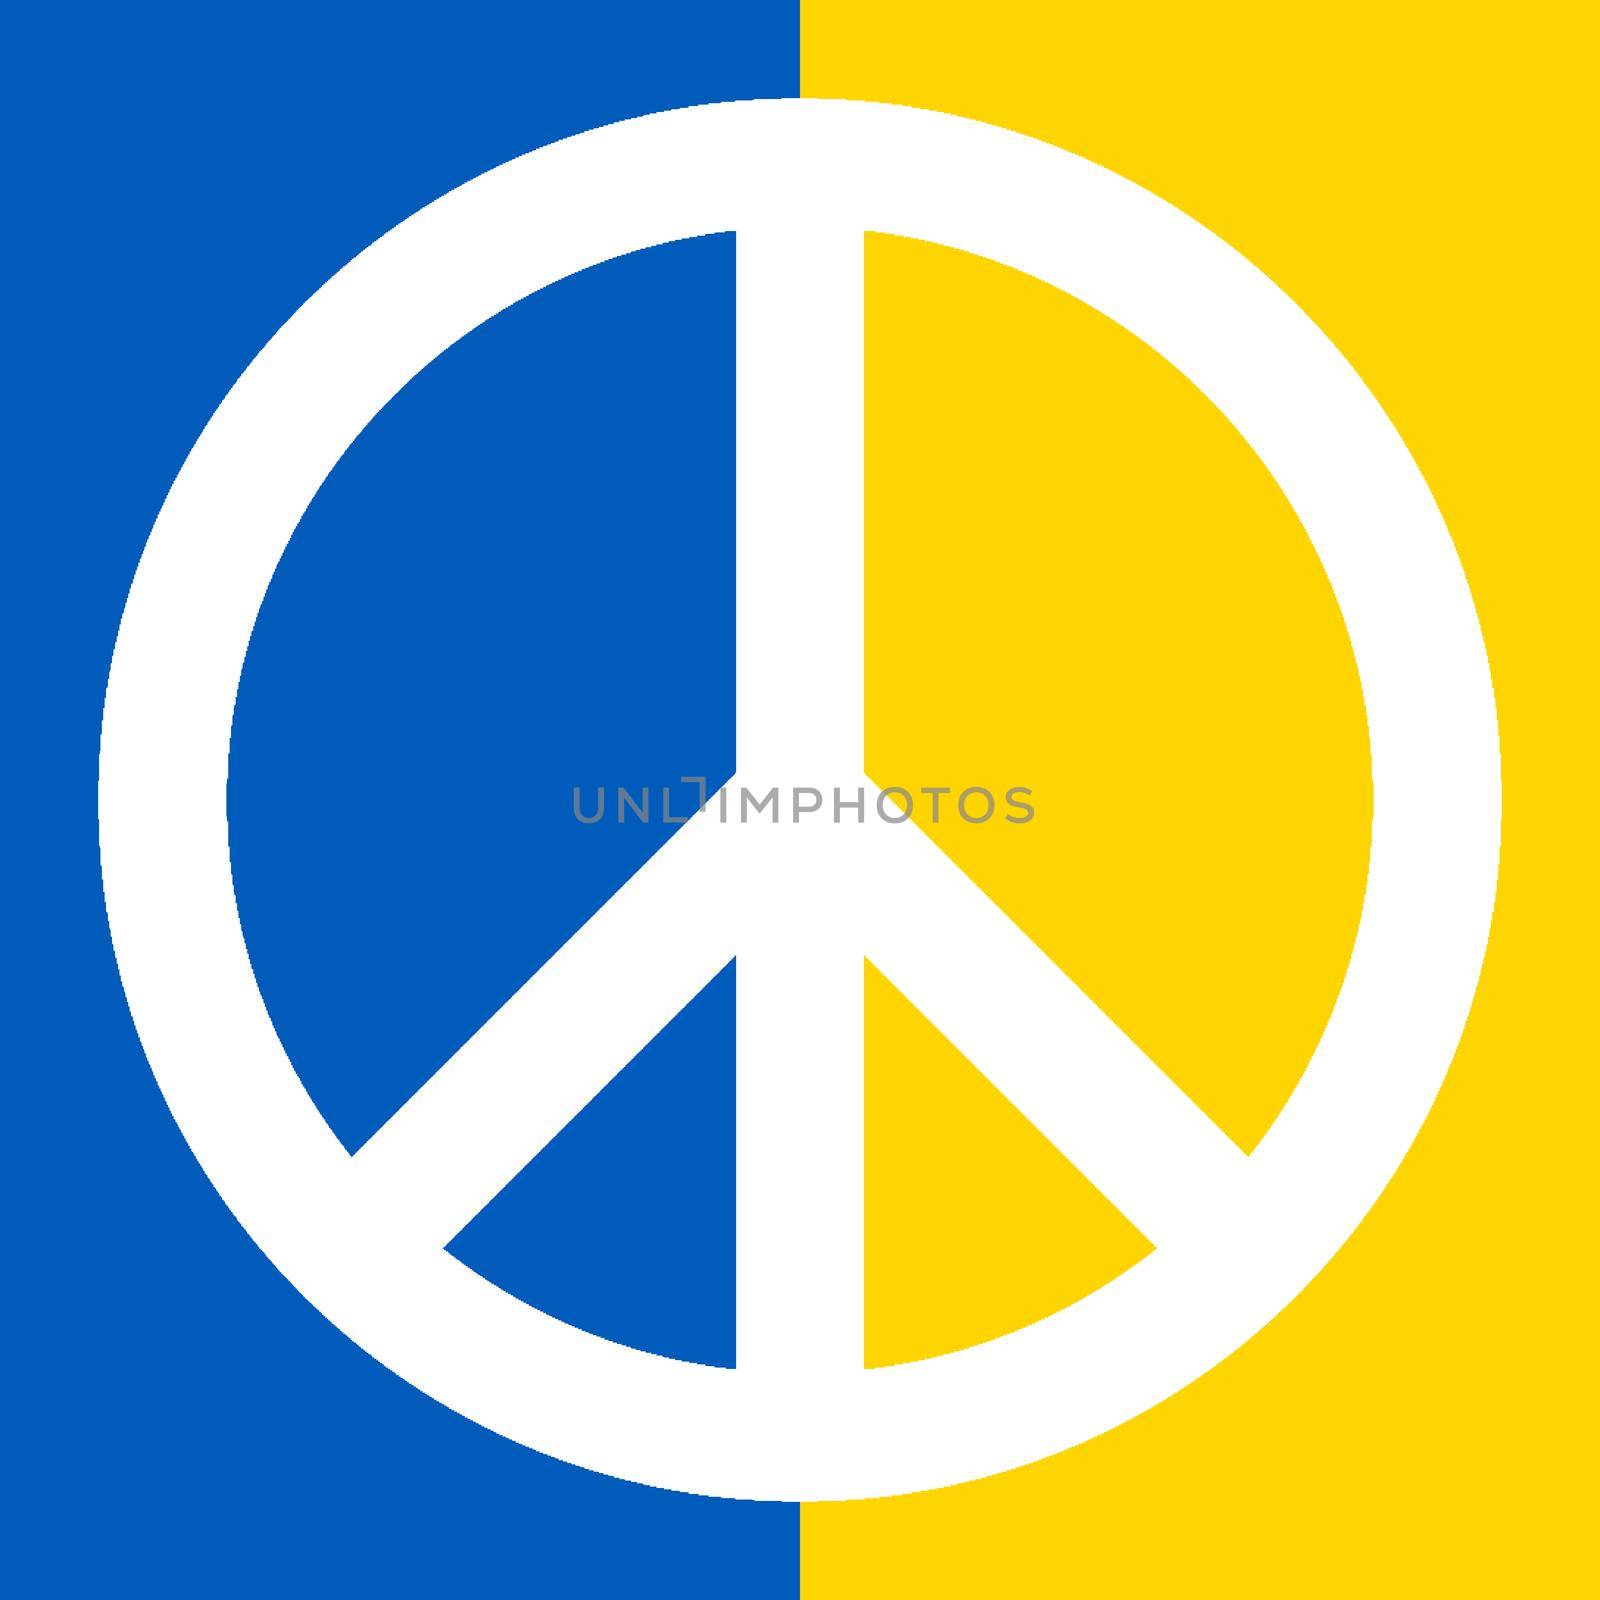 Ukraine flag with peace symbol by germanopoli